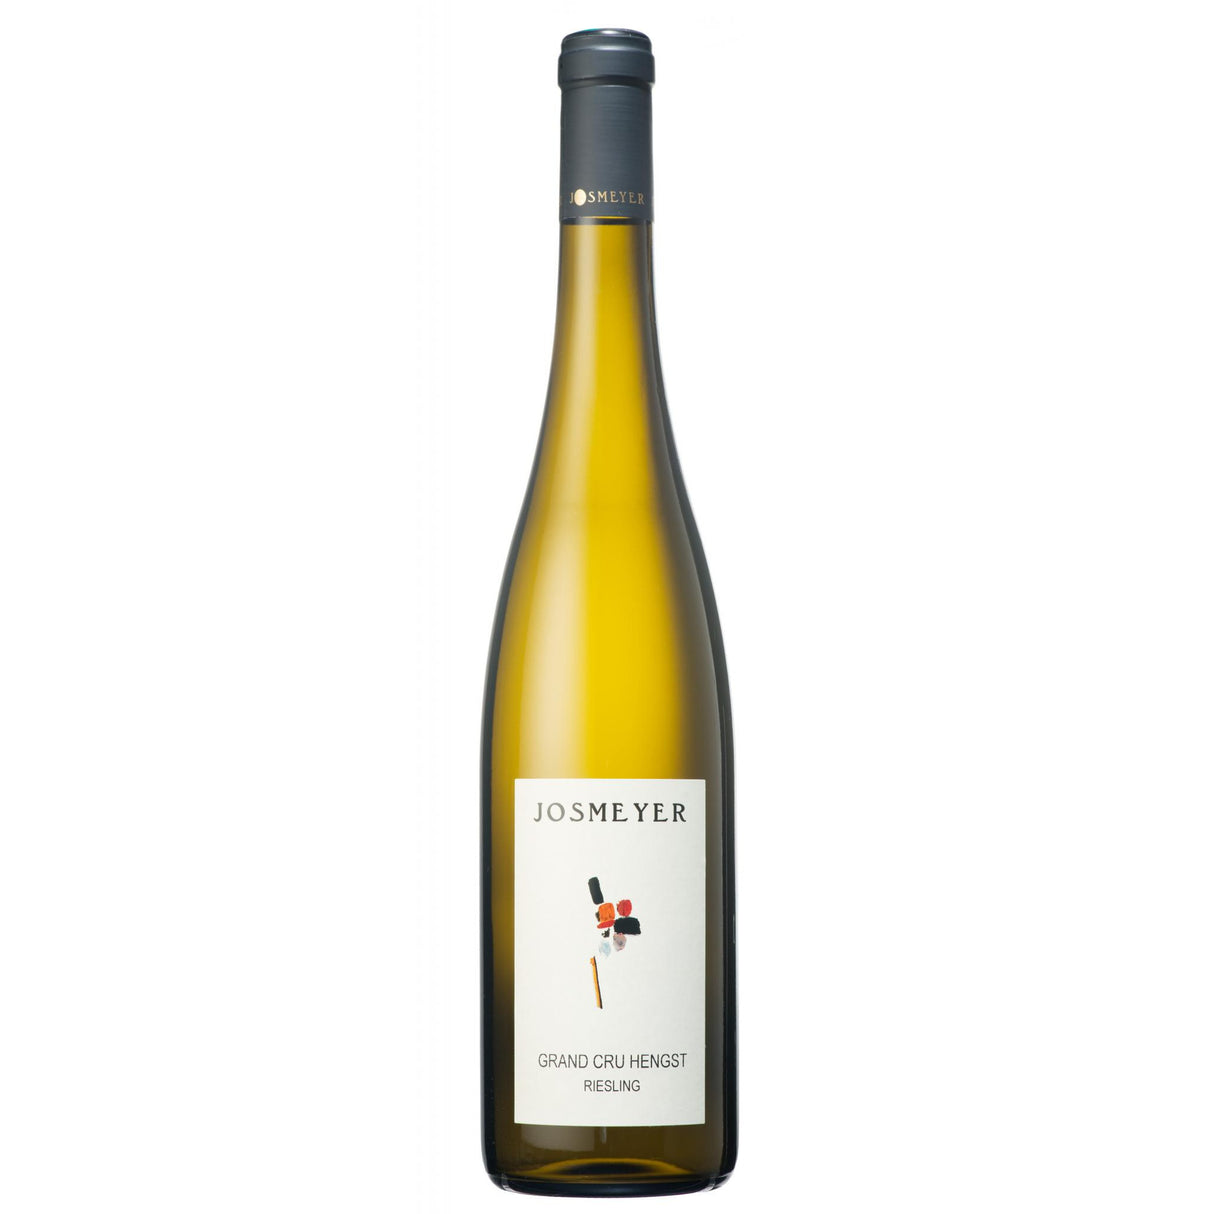 Josmeyer Riesling “Hengst” Grand Cru 2018-White Wine-World Wine